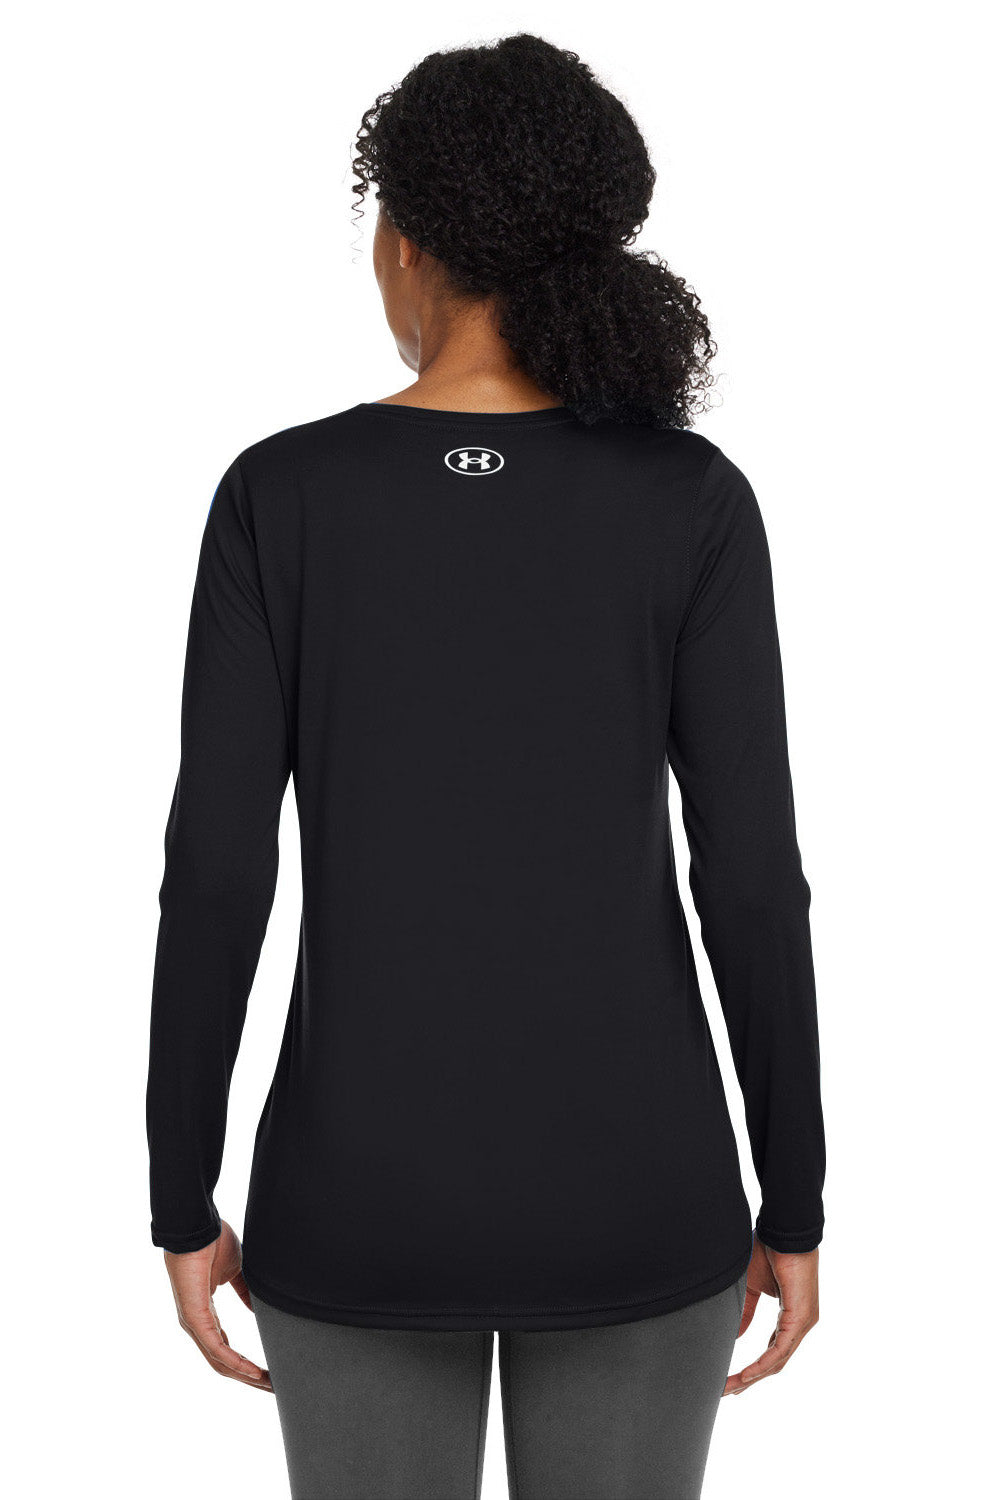 Under Armour 1376852 Womens Team Tech Moisture Wicking Long Sleeve Crewneck T-Shirt Black Model Back